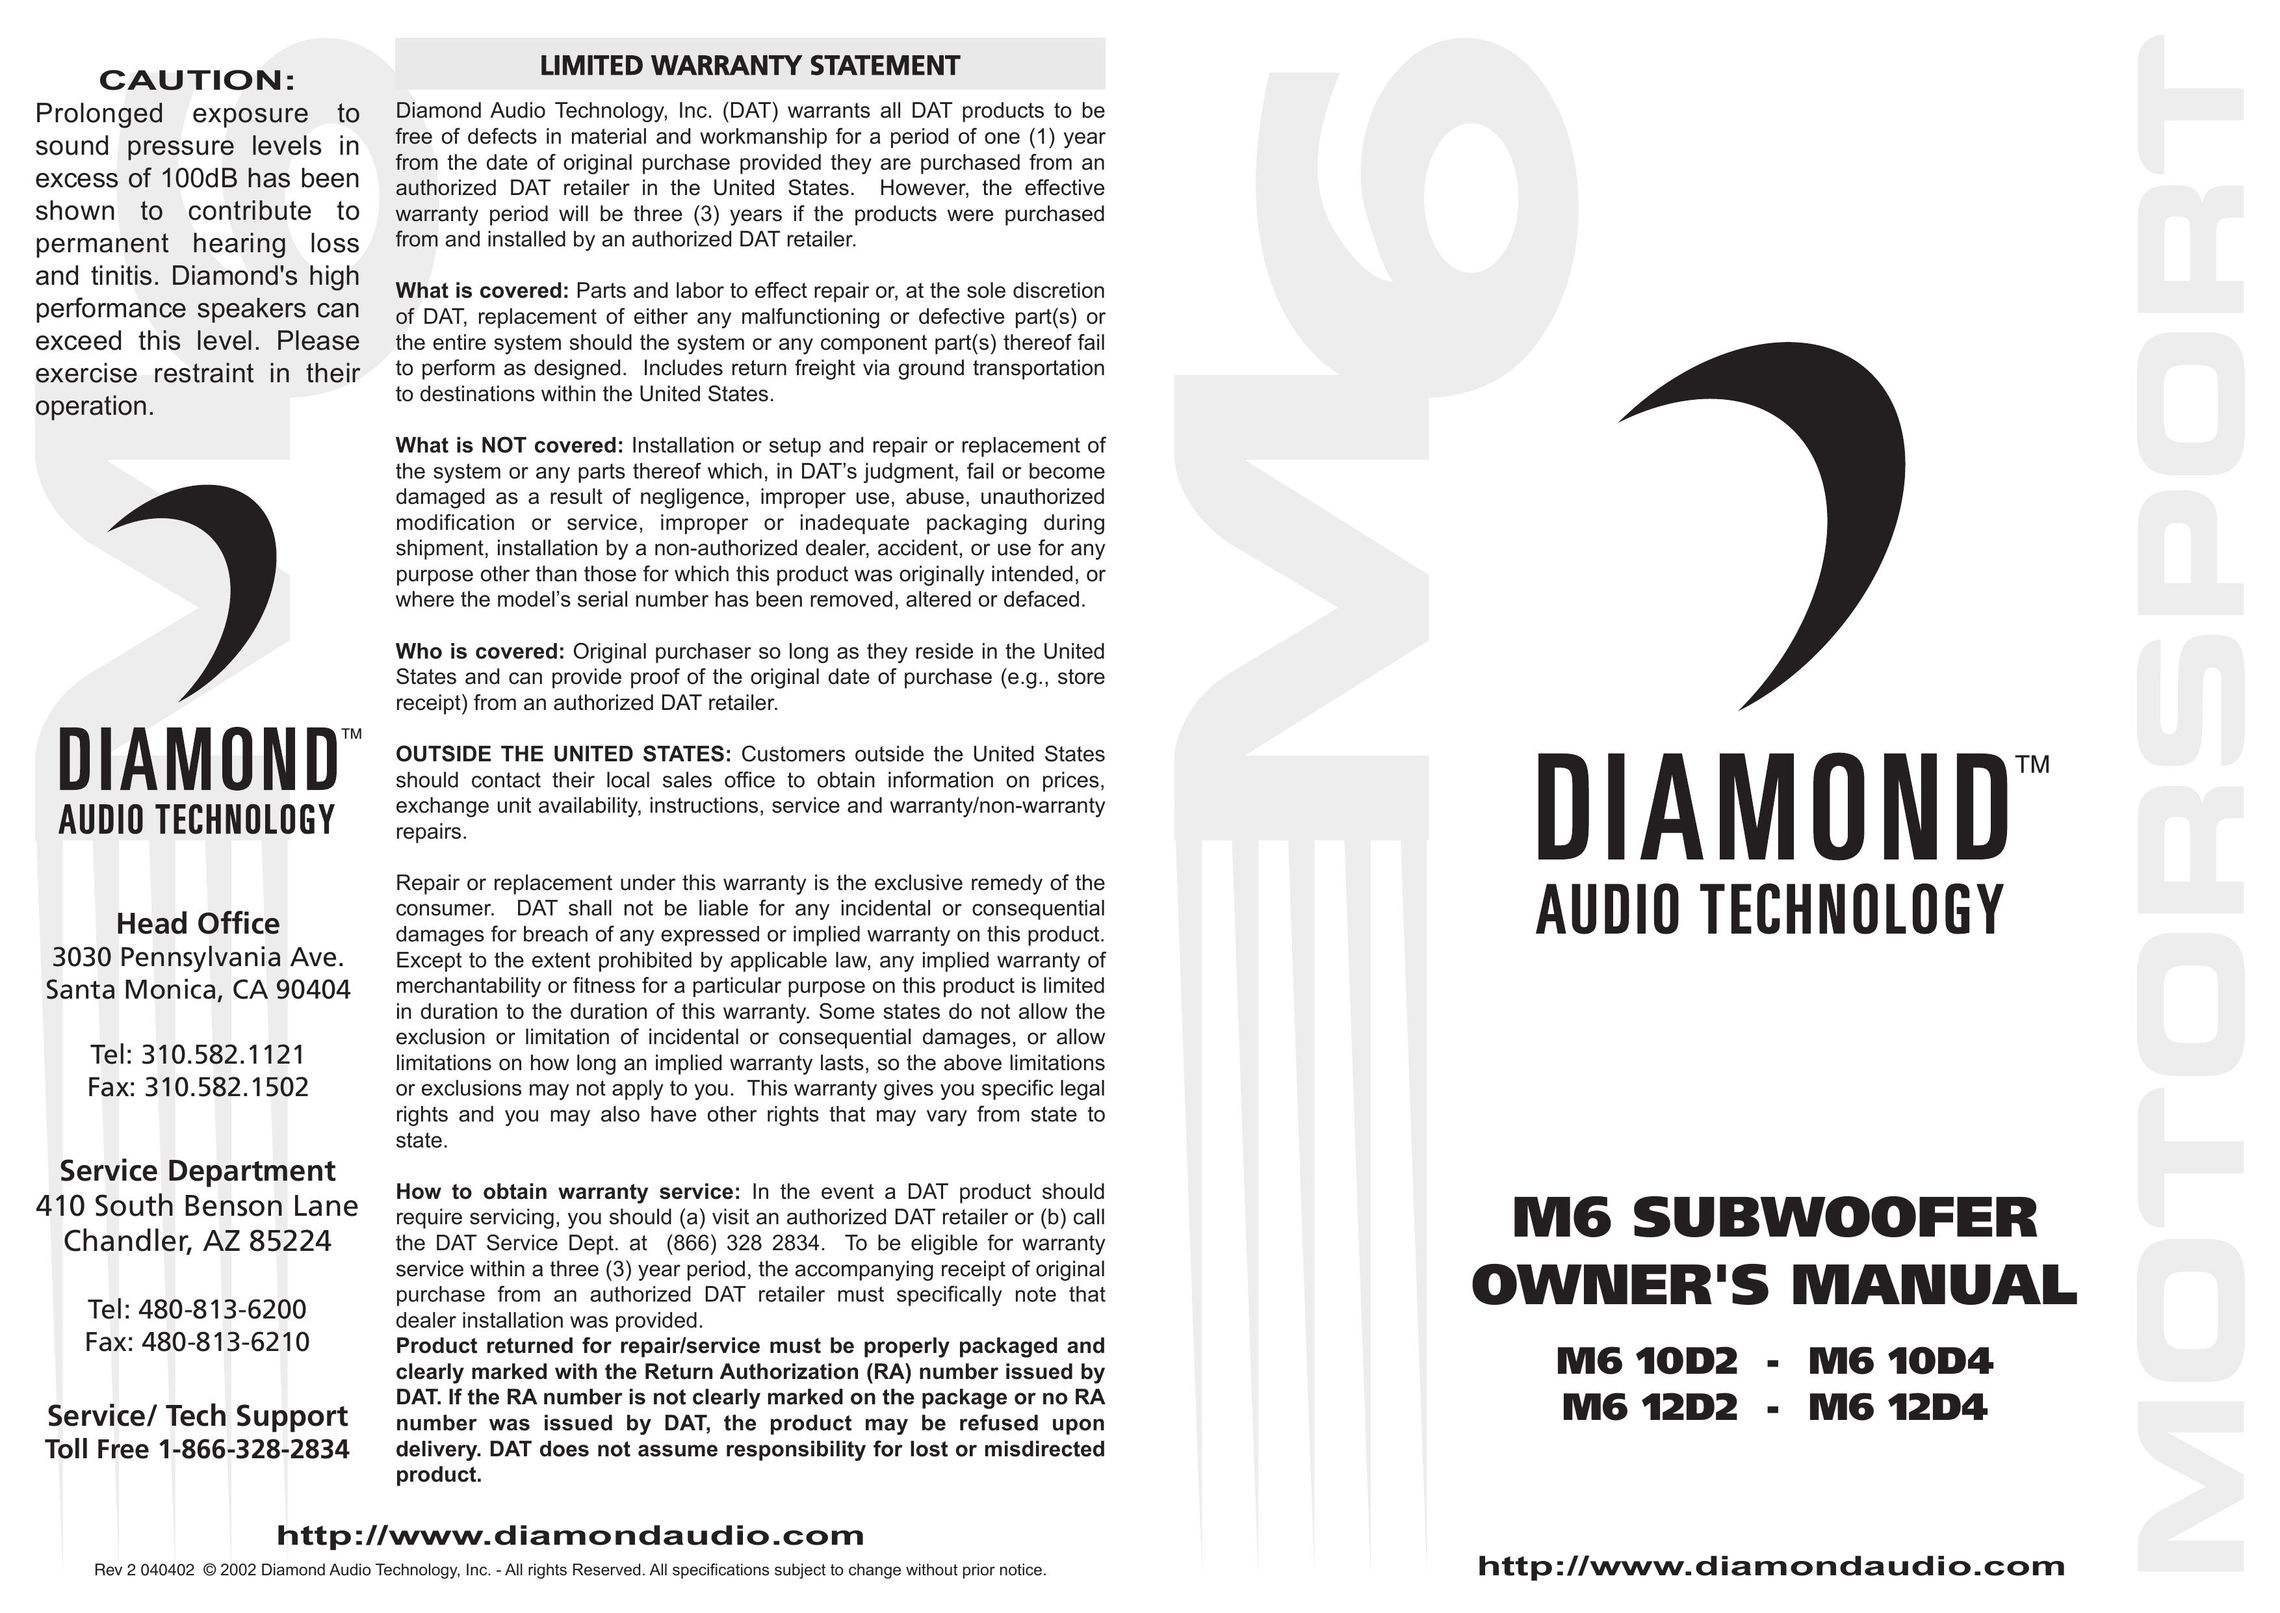 Diamond Audio Technology M6 12D4 Speaker User Manual